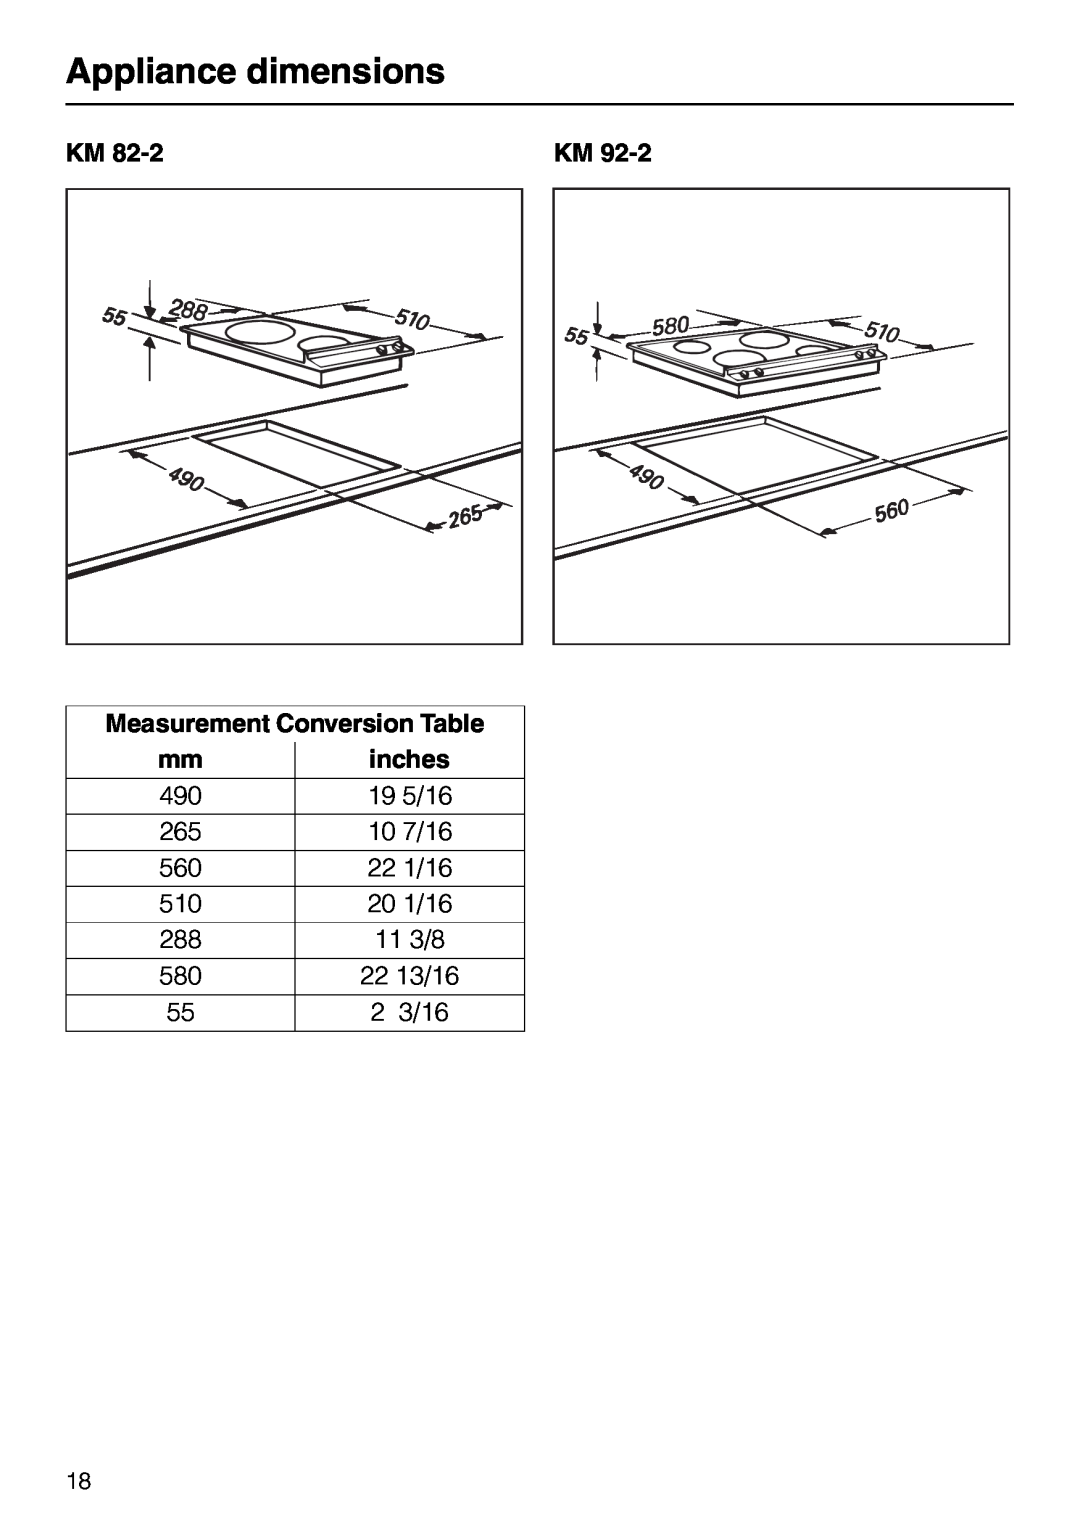 Miele KM82-2, KM 92-2 manual Appliance dimensions, Measurement Conversion Table, inches 